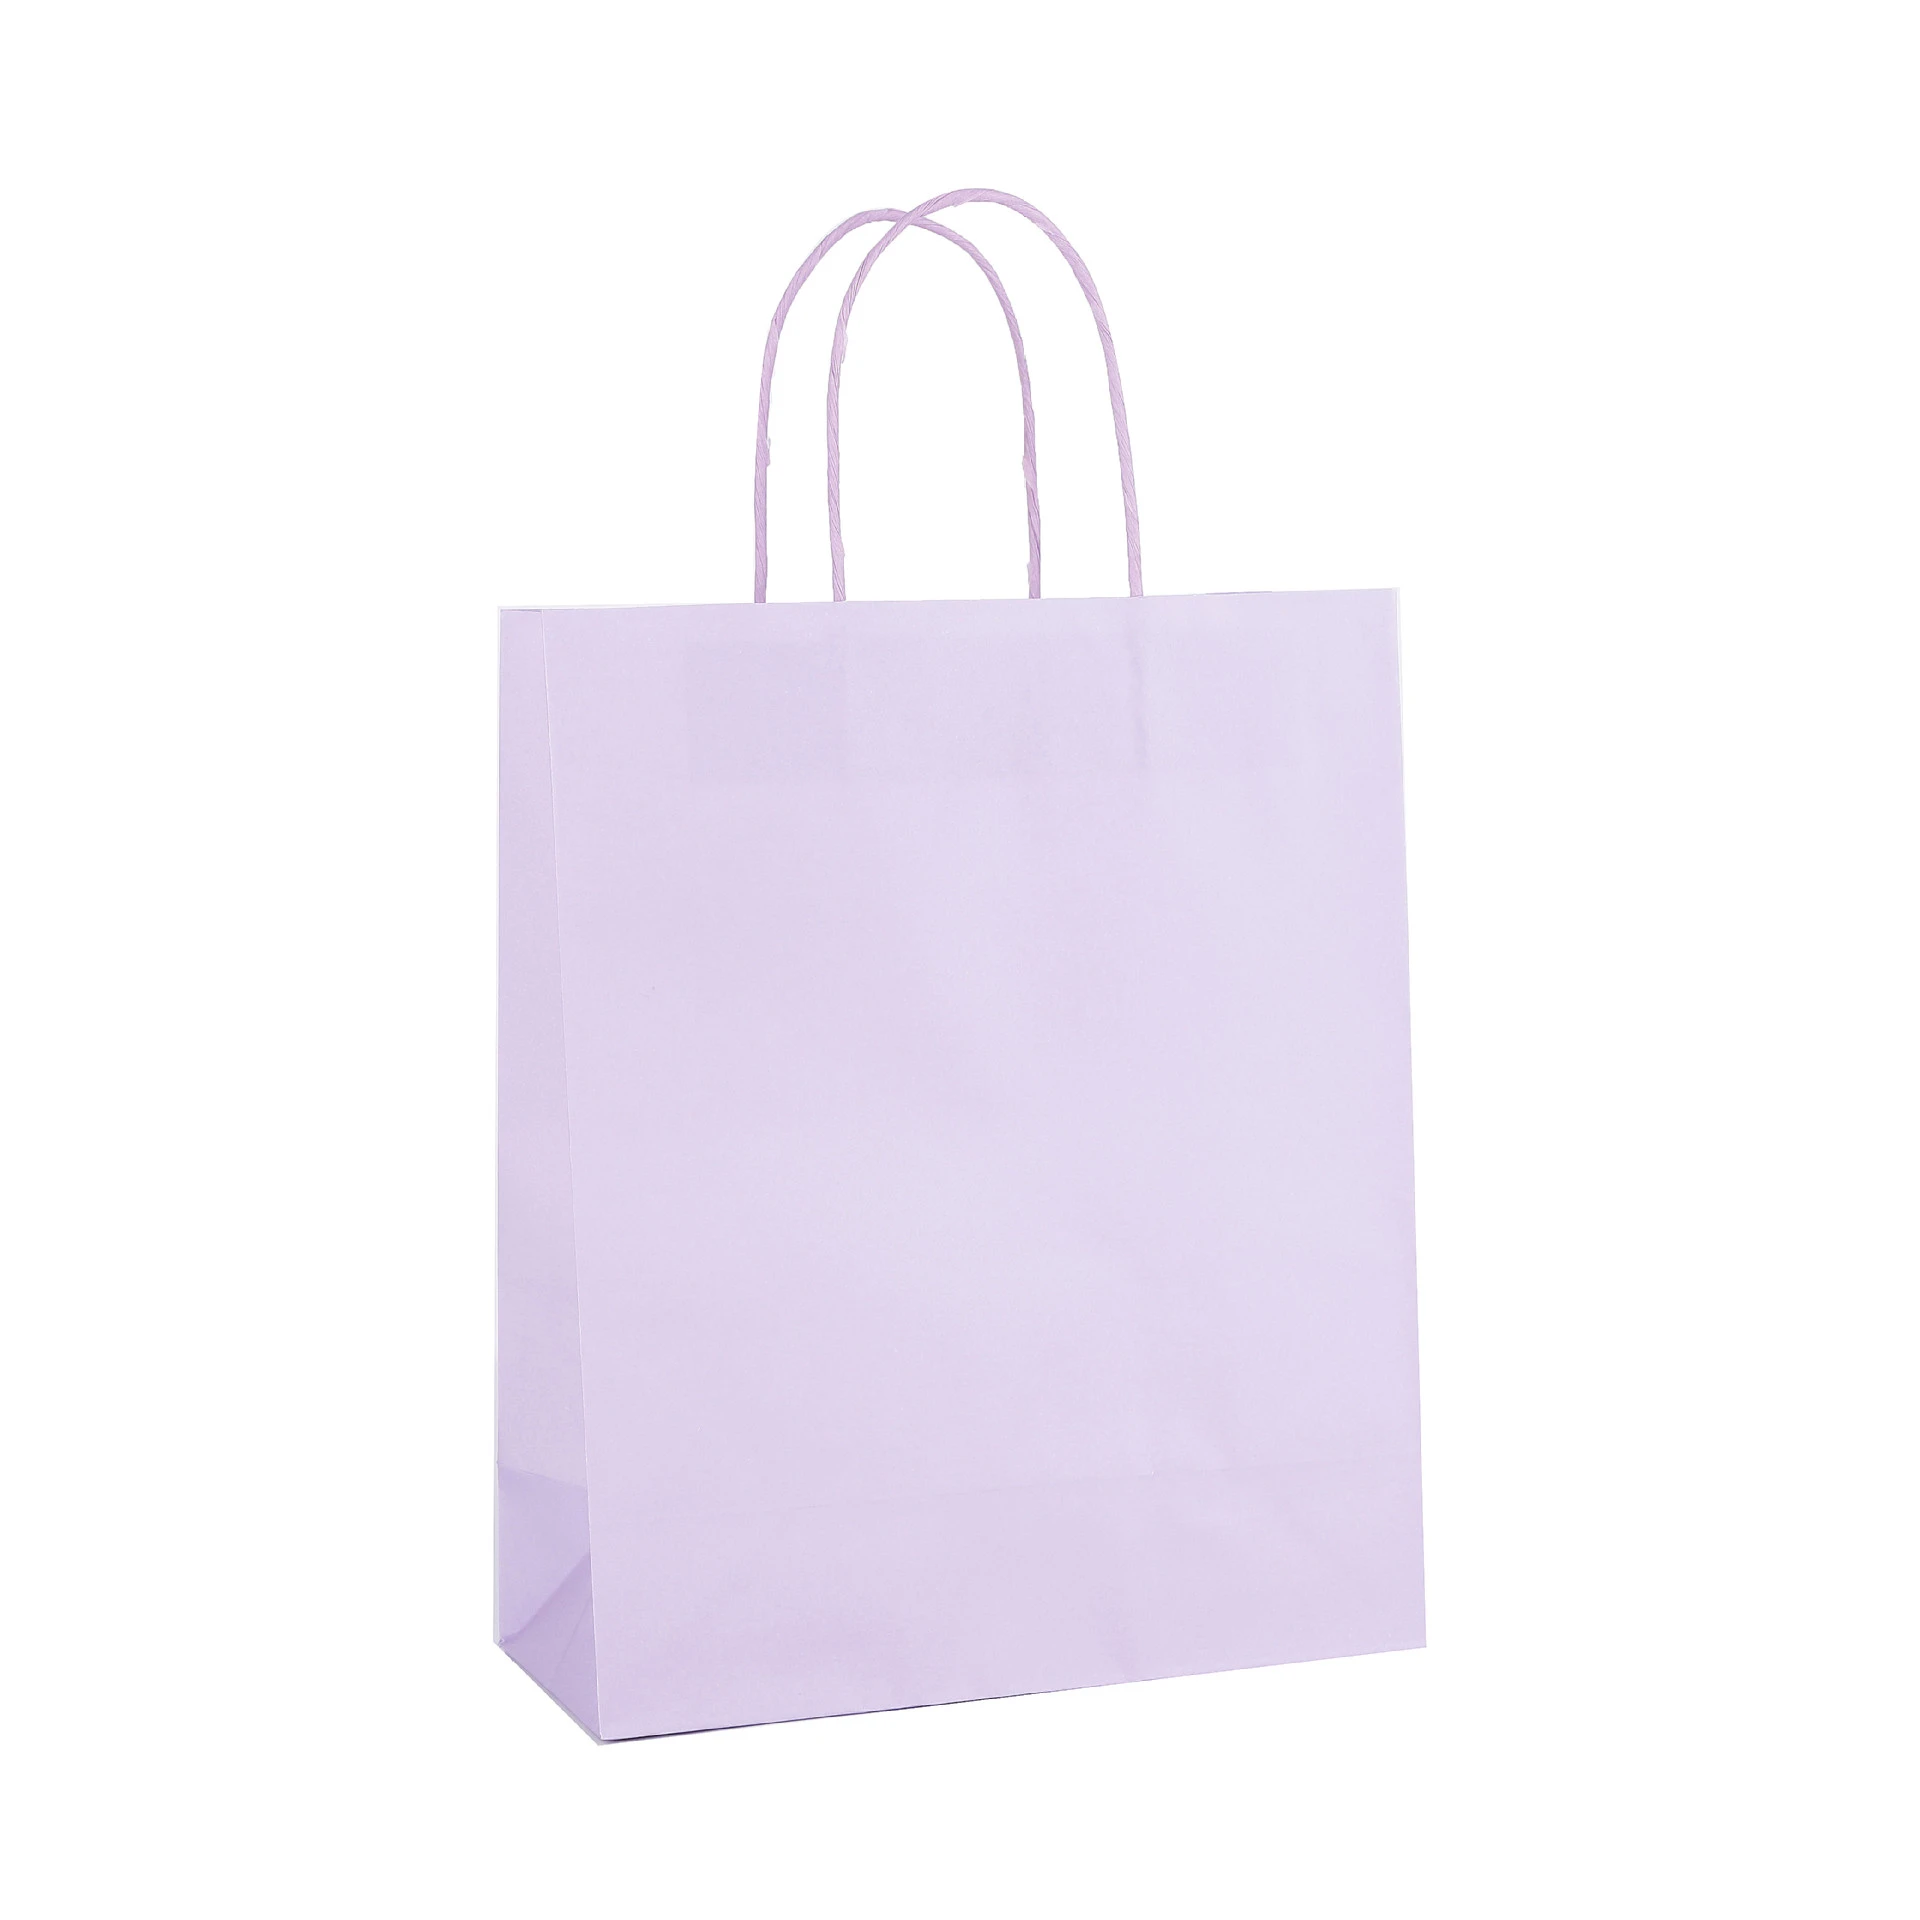 Shopping bag reusable online shop bags kraft paper bags to shopping